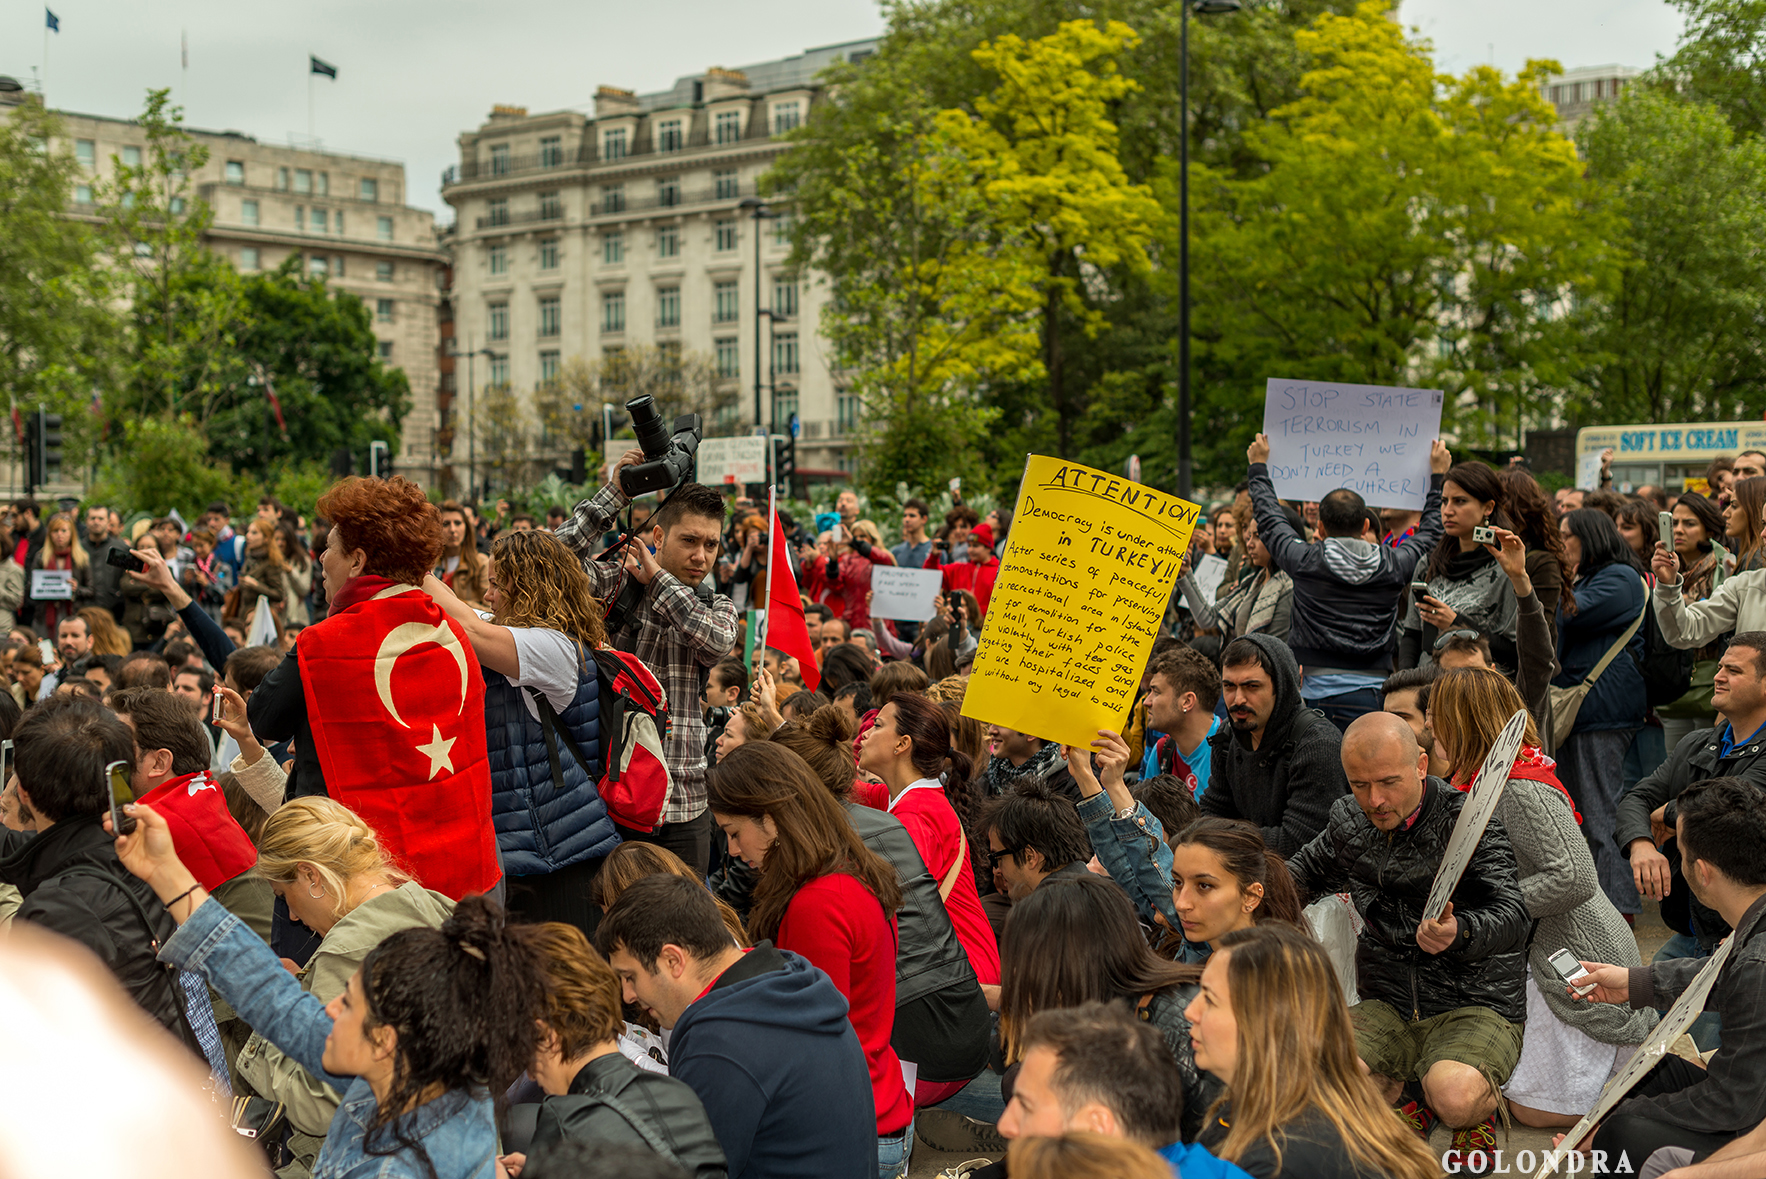 Protesting Turkish Government - Turk Hukumetini Protesto - Londra - London (2)